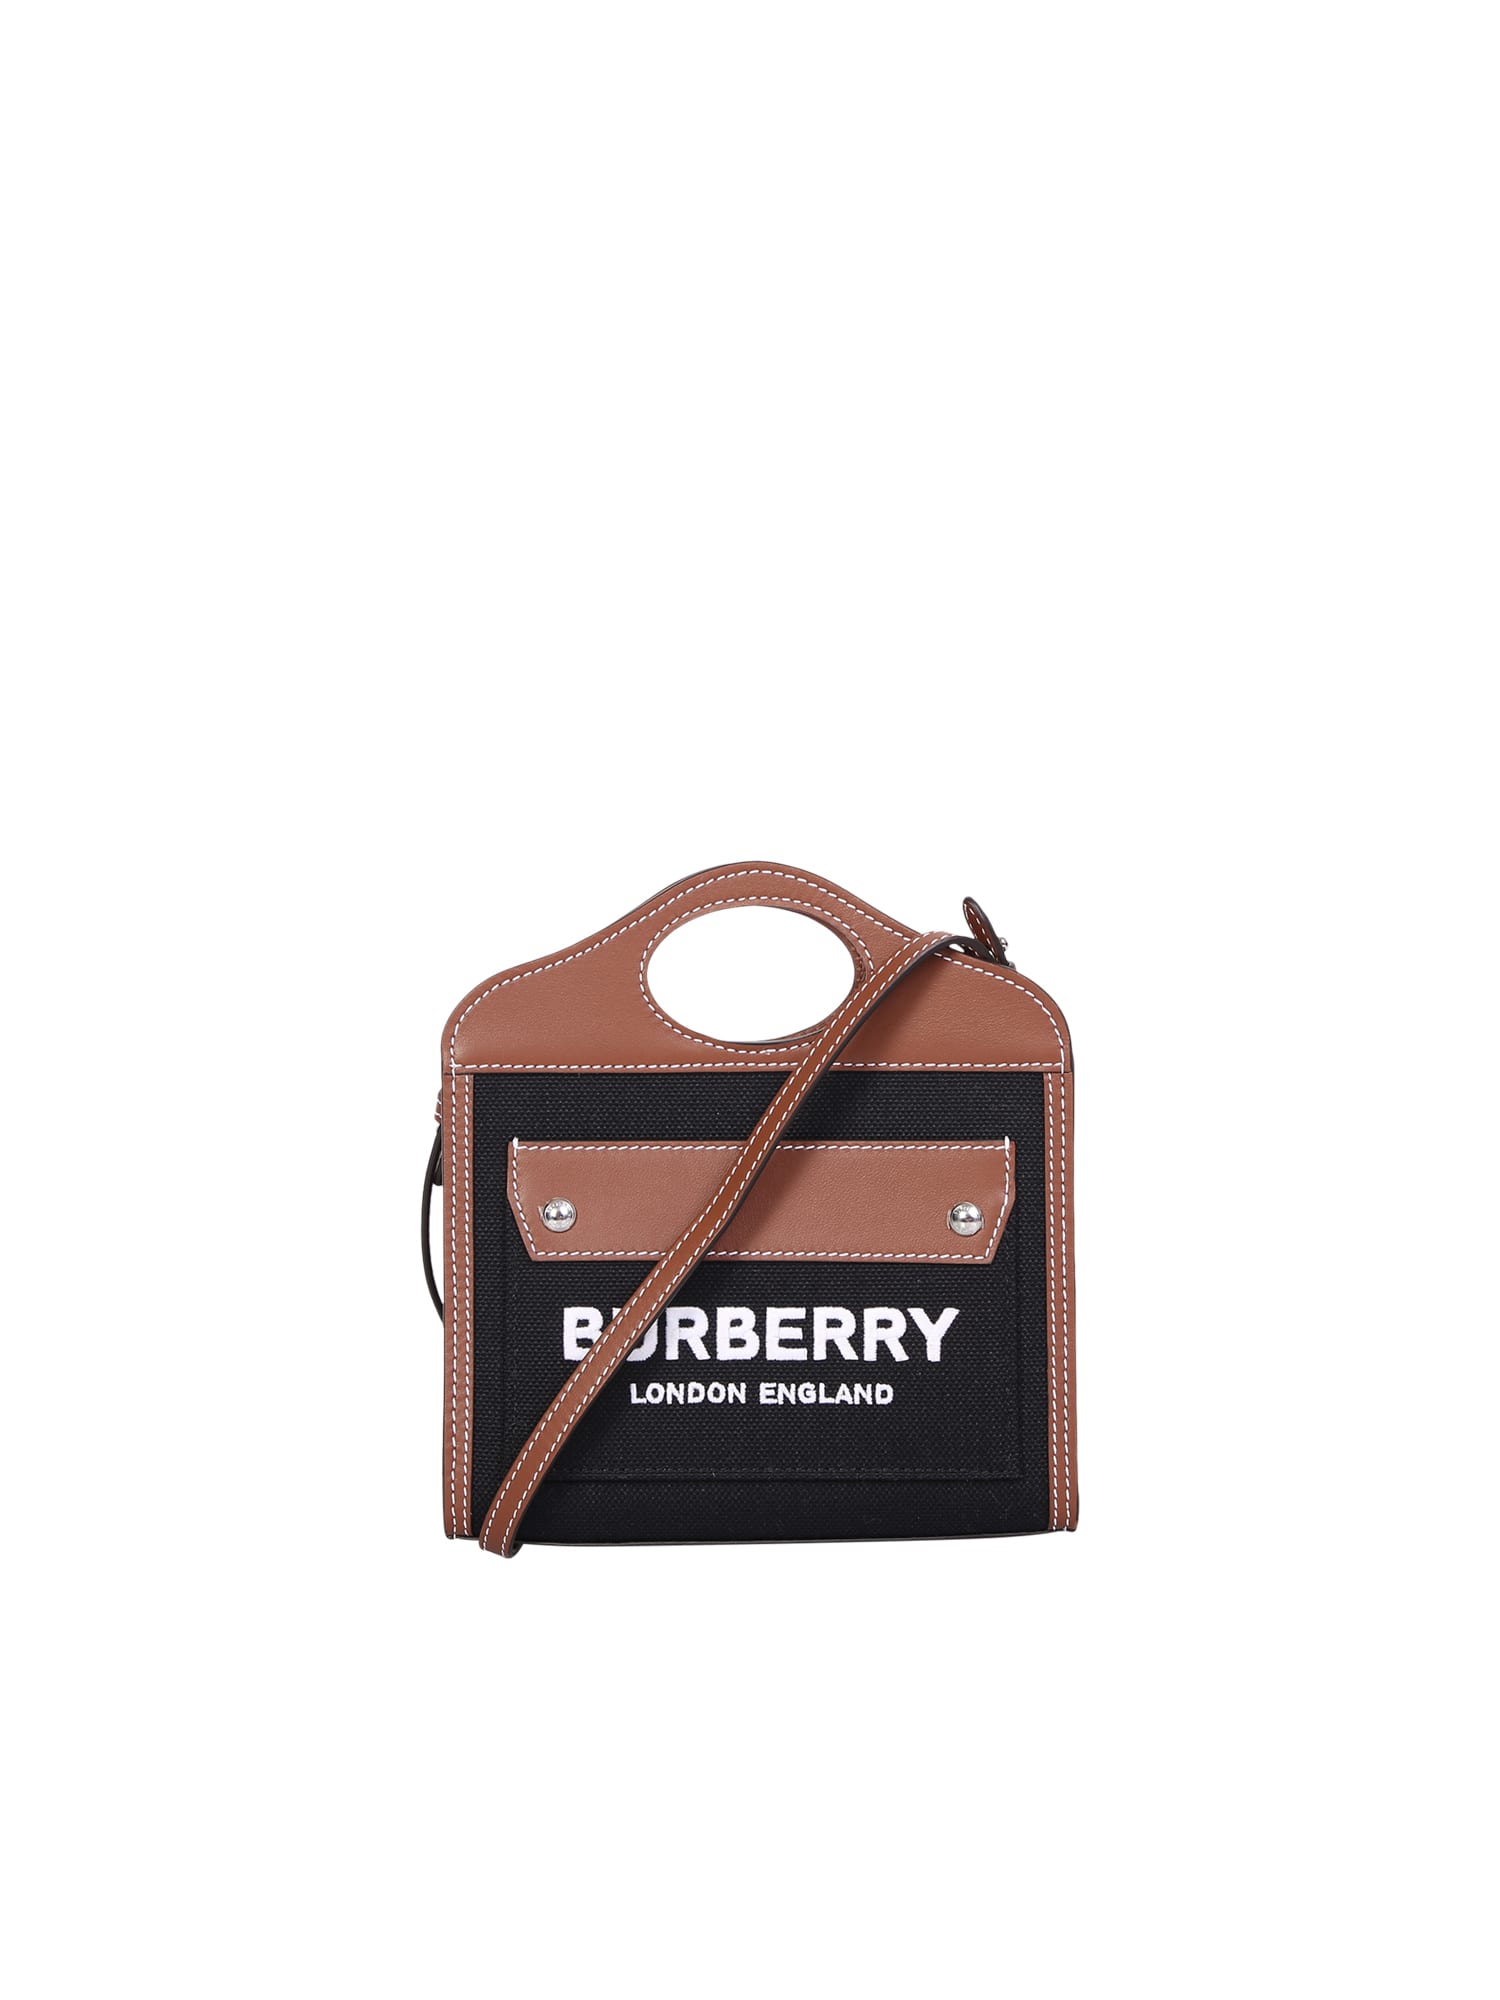 Burberry Mini Tote Bag Black And Brown